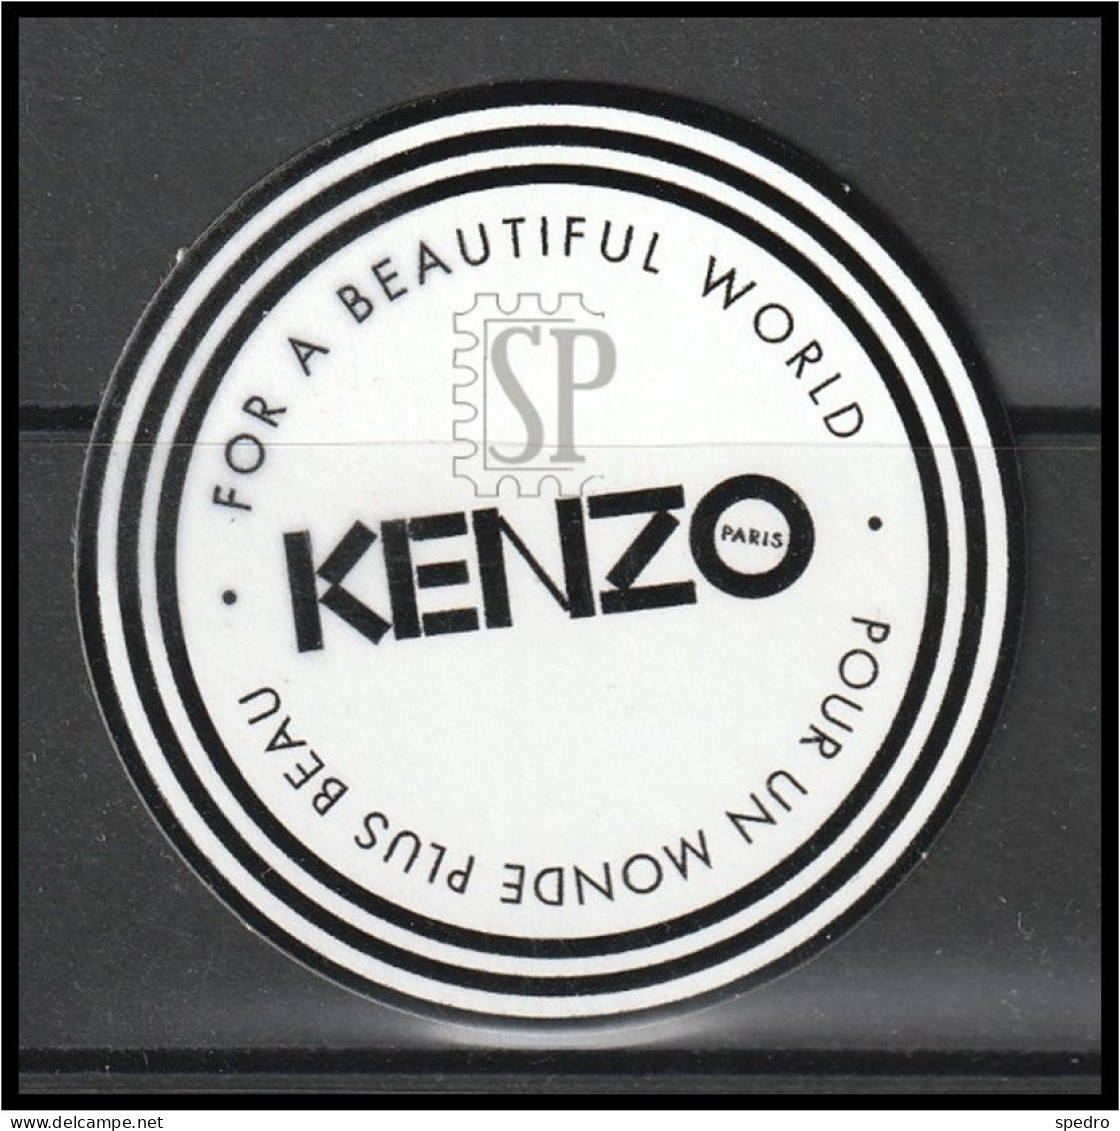 Kenzo Perfume Card Carte Parfumée Cartão Perfumado For A Beautiful World Paris - Modern (ab 1961)